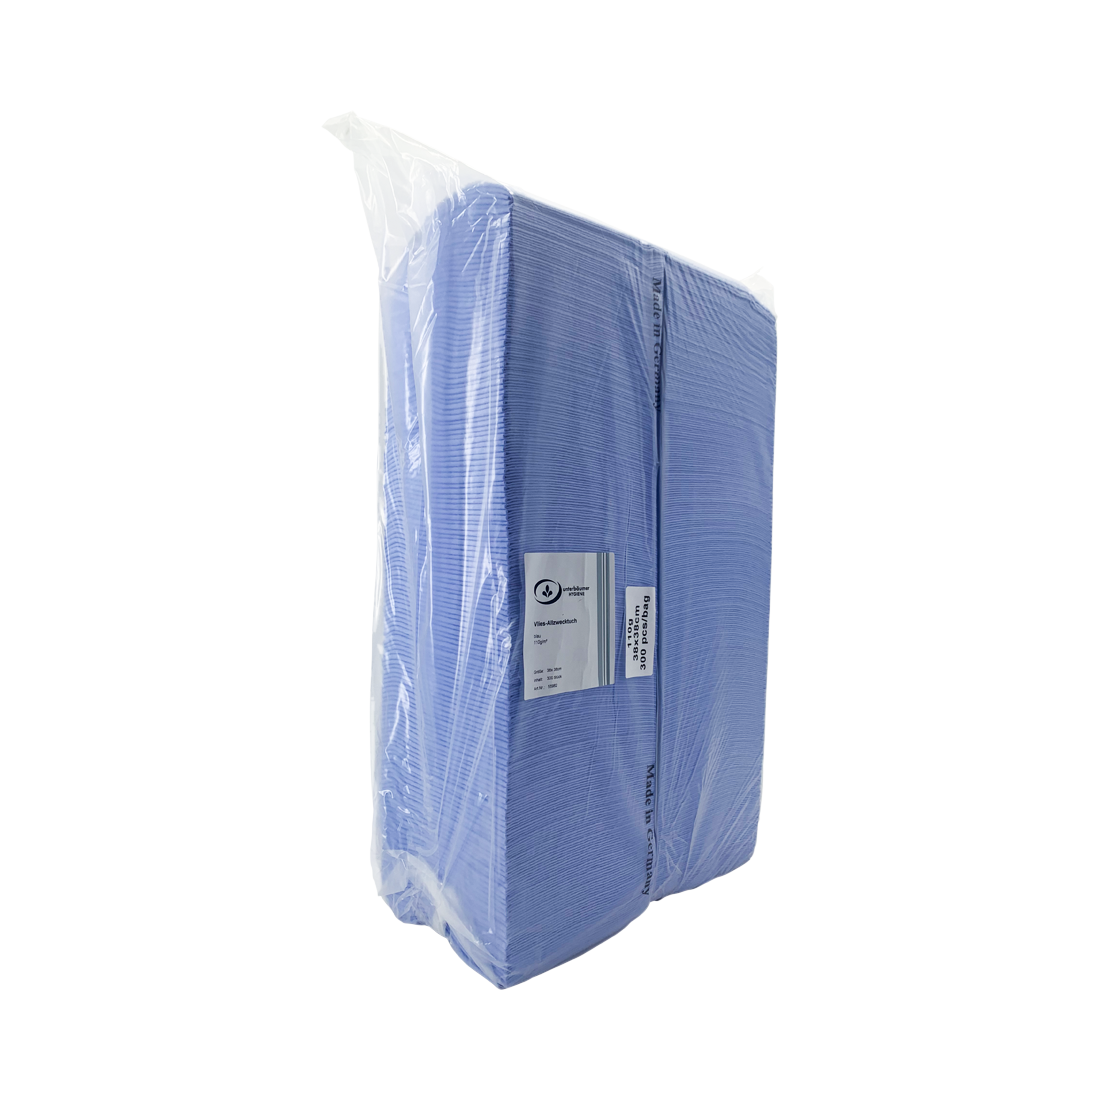 Vlies-Allzwecktuch ca. 110g/m², 300 Stück/Karton, blau, 38 x 38 cm